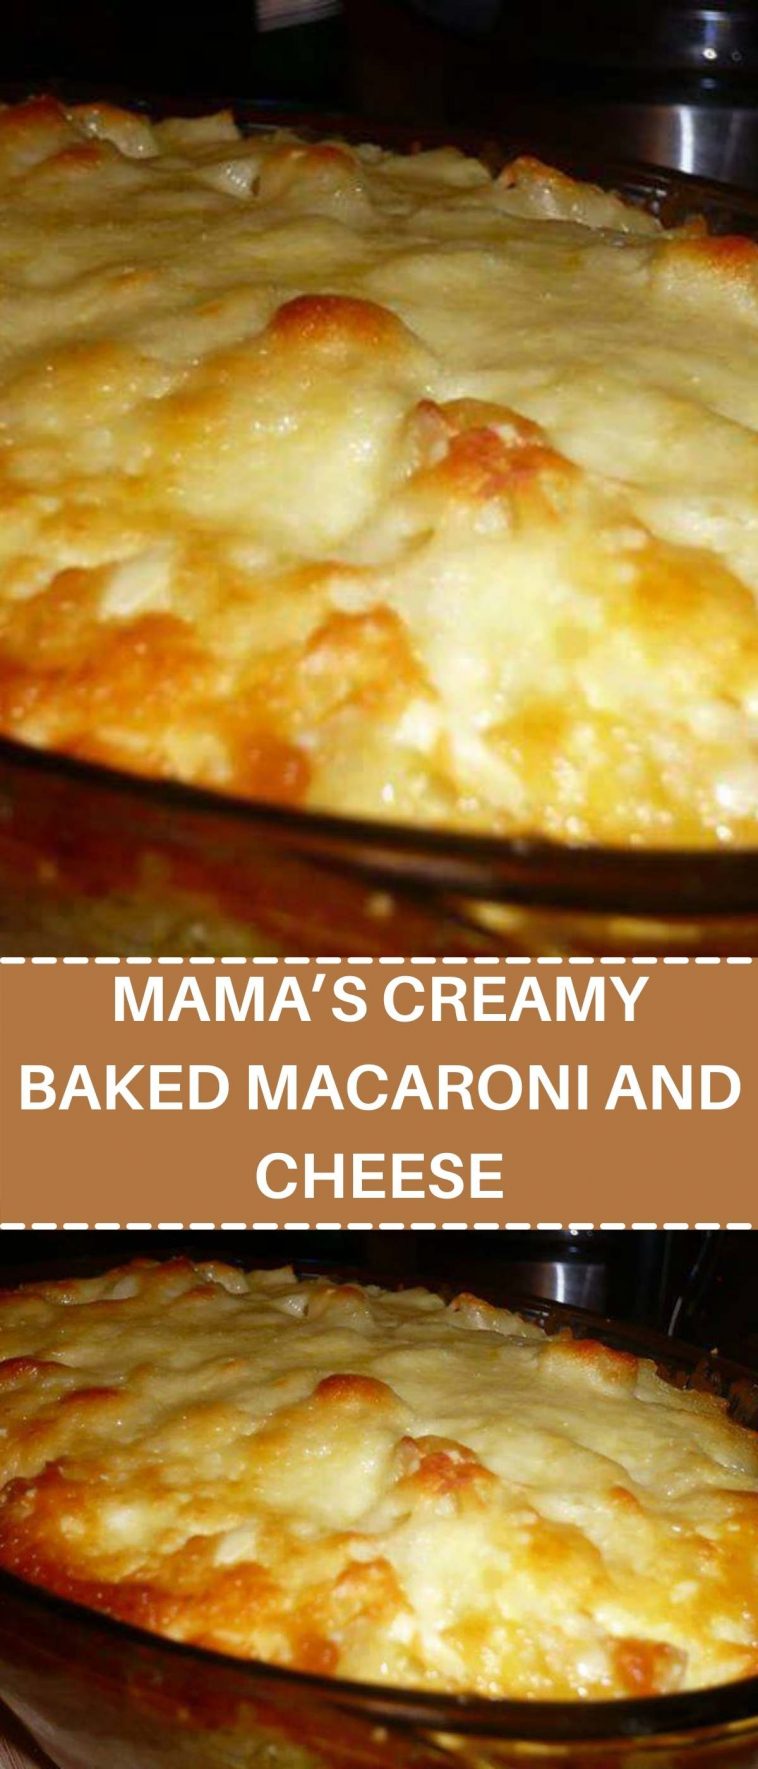 MAMA’S CREAMY BAKED MACARONI AND CHEESE